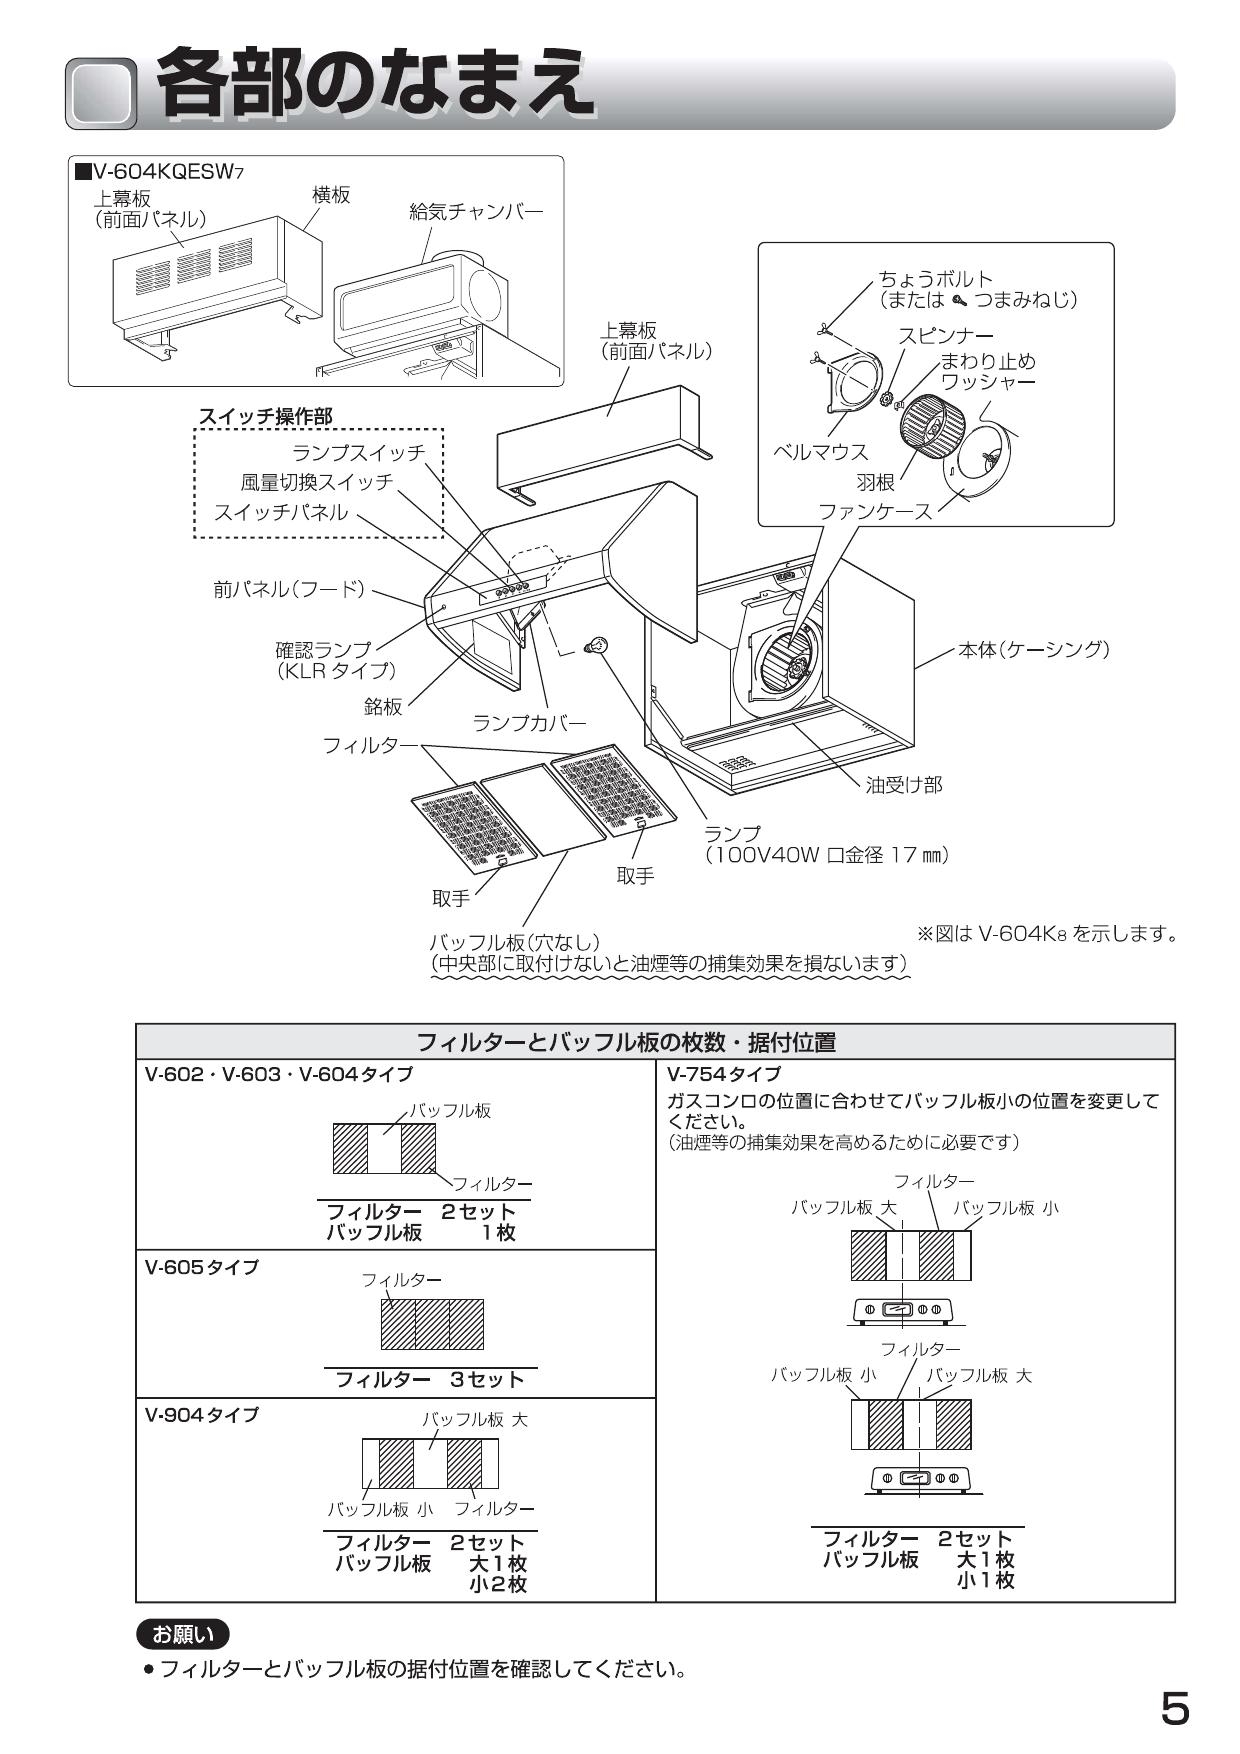 SALE／91%OFF】 三菱電機 MITSUBISHI 換気扇 ロナスイ ホワイト V-316K7